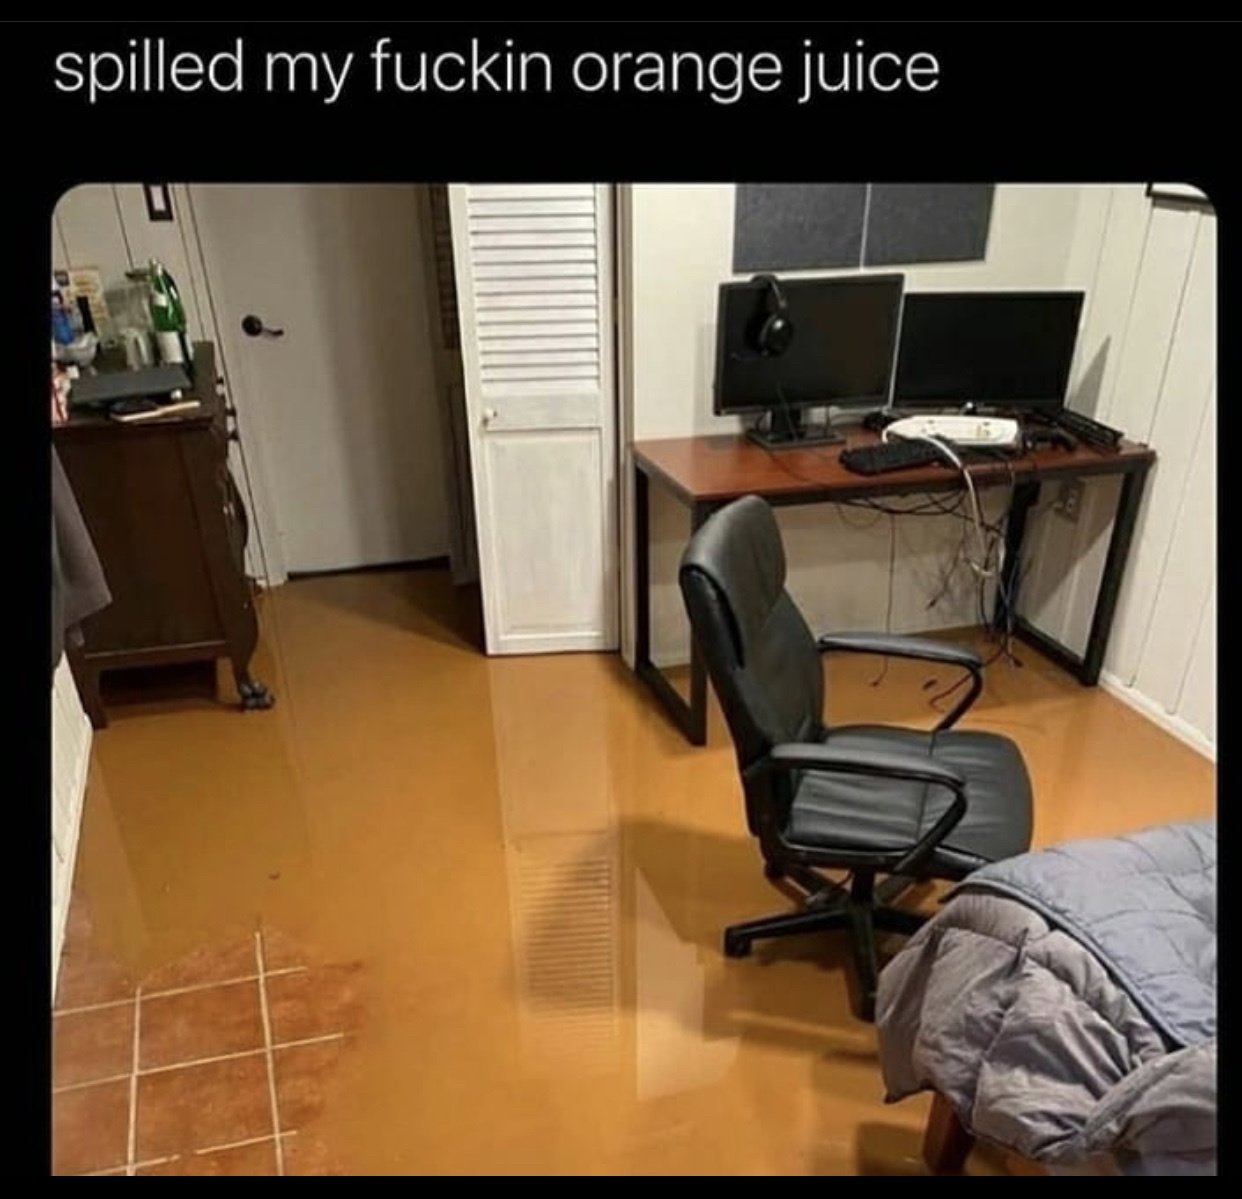 he spilled his orange juice - meme